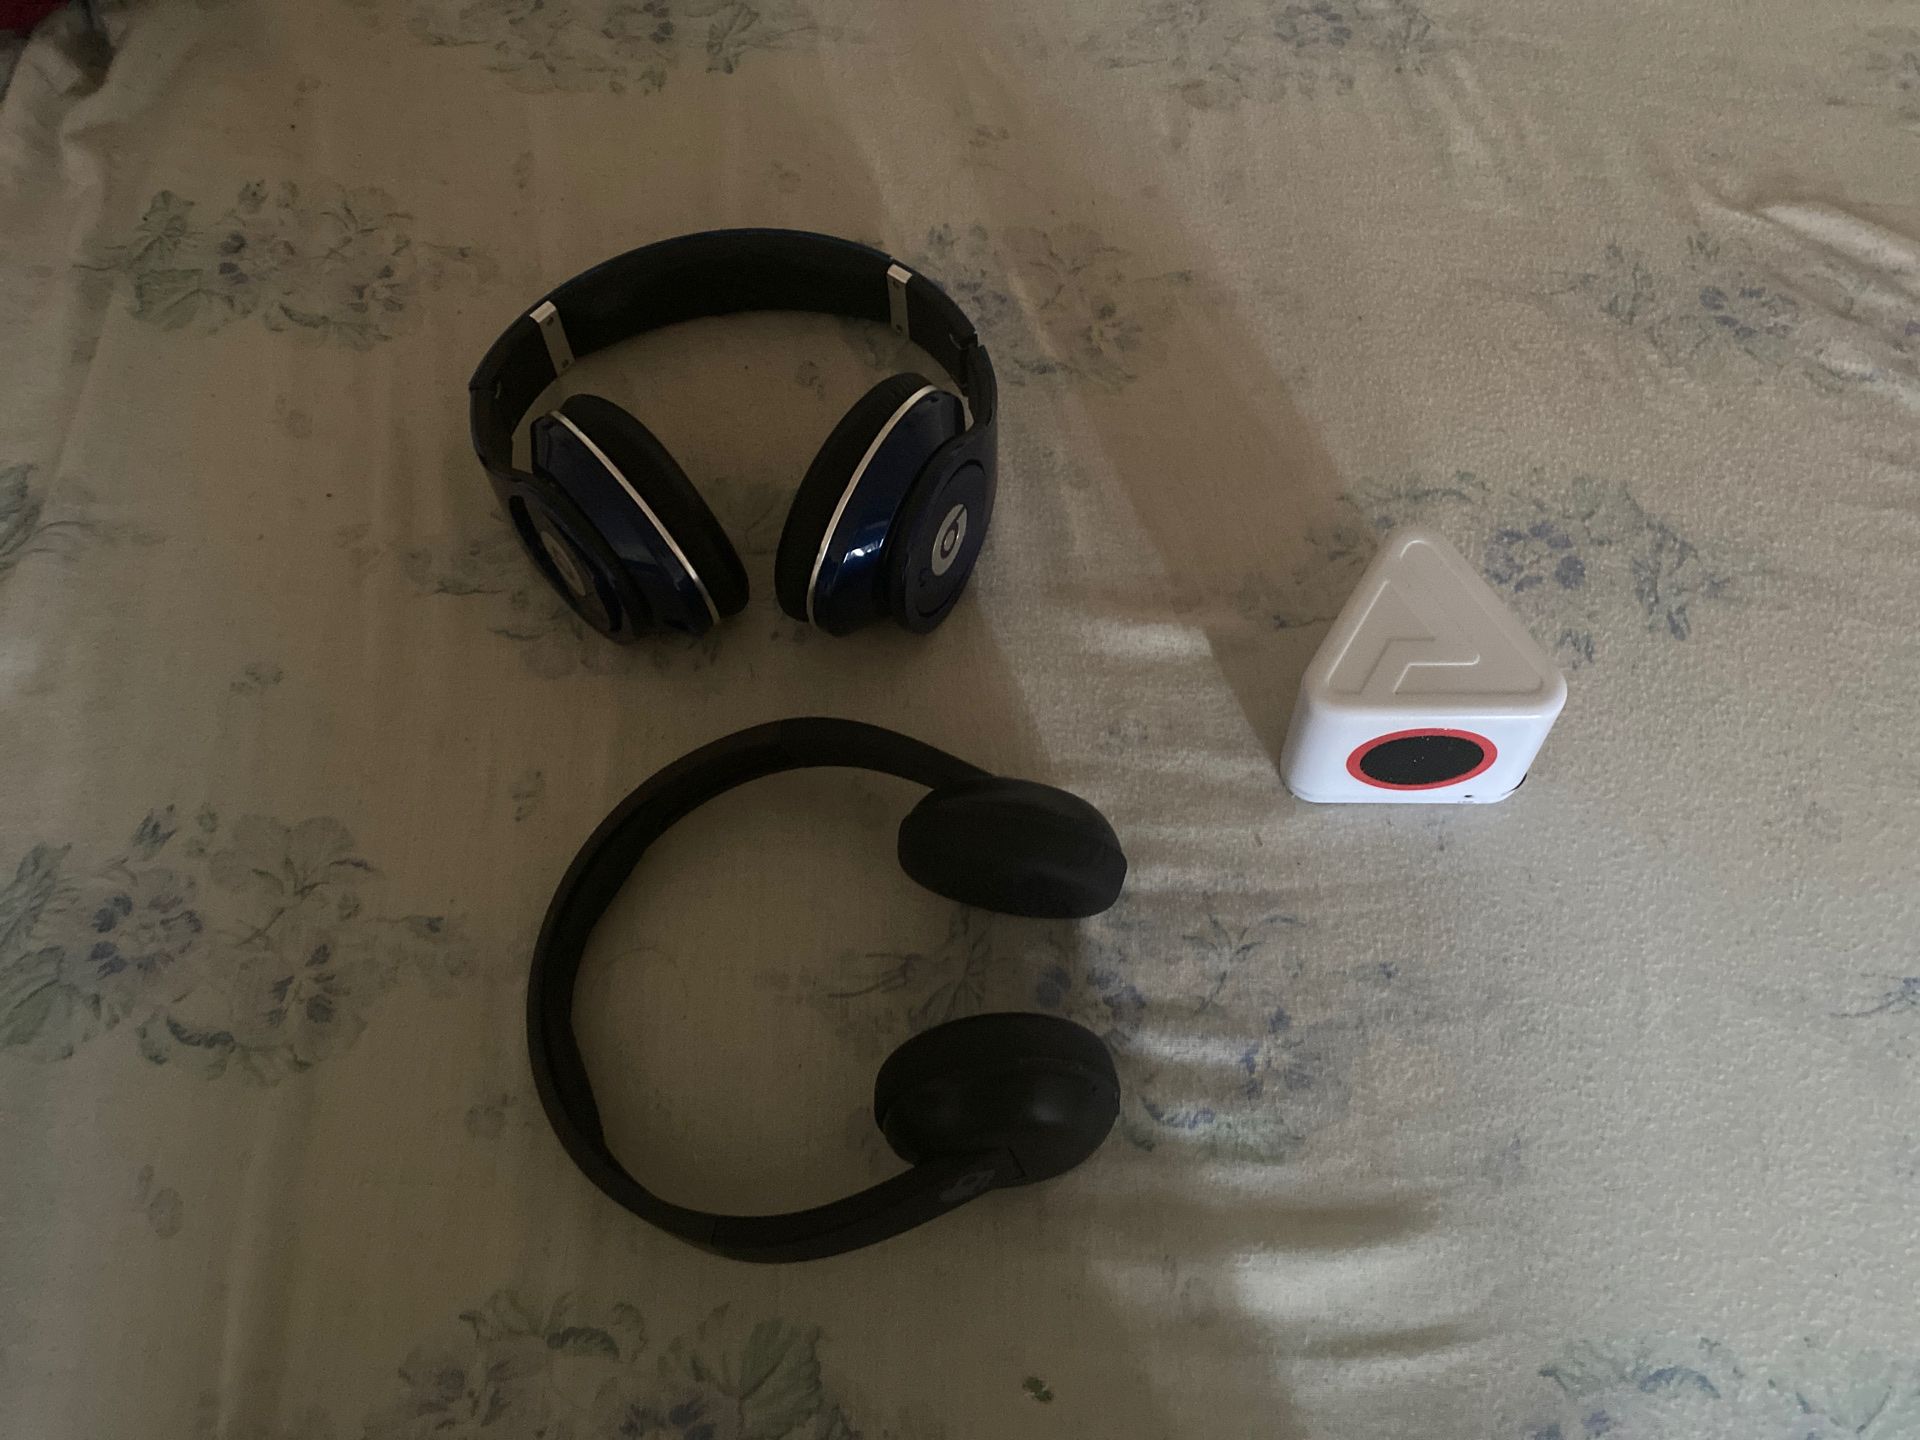 Speaker and headphones